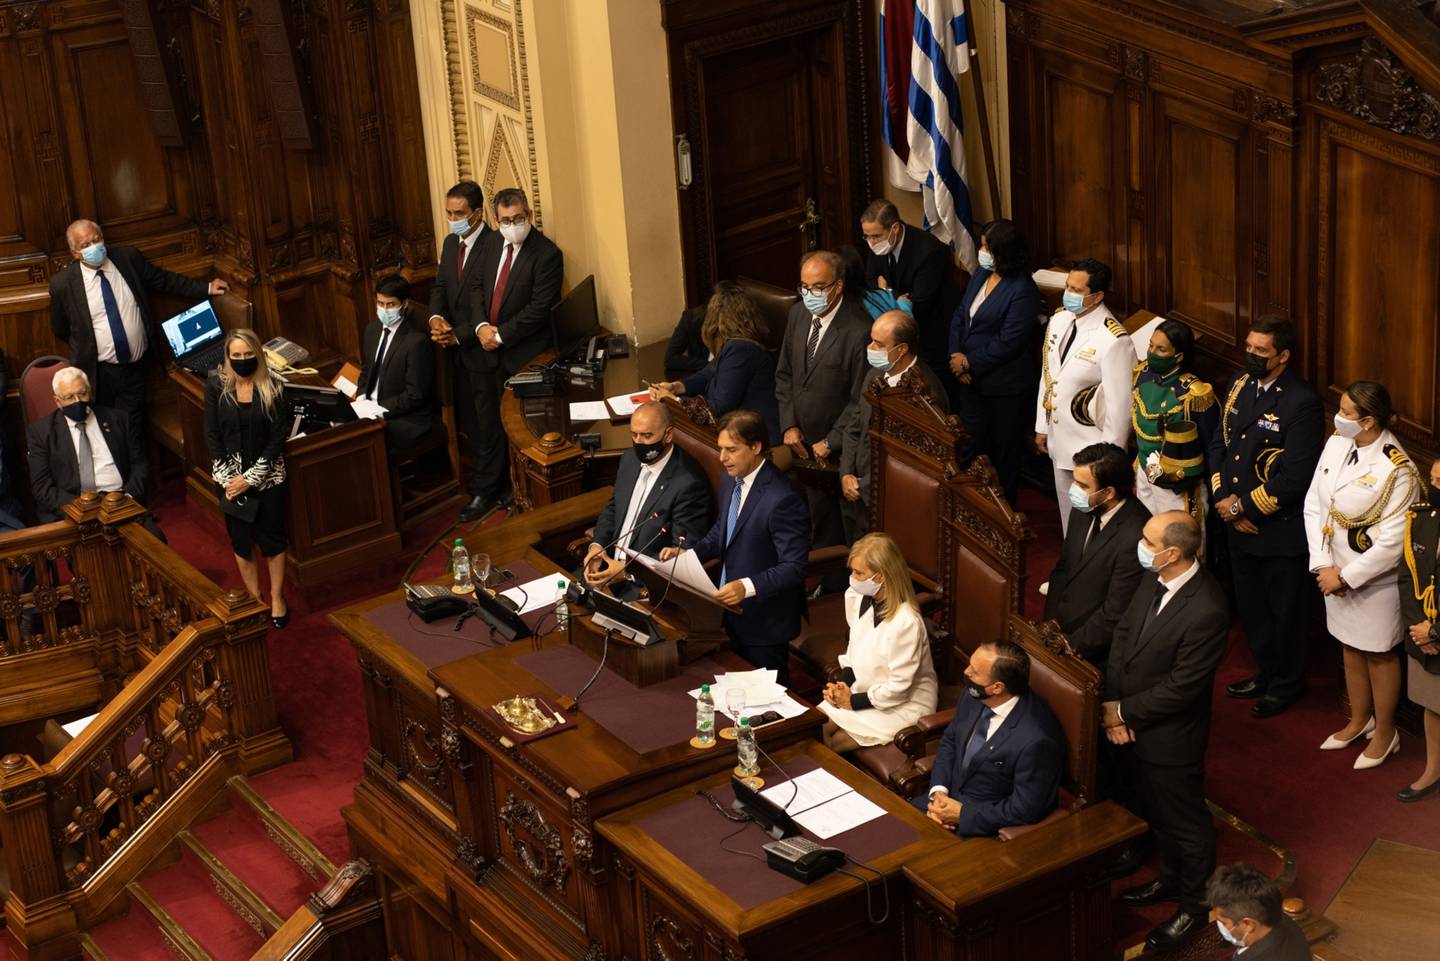 Luis Lacalle Pou en su discurso de este miércoles 2 ante la Asamblea General. Photographer: Ana Ferreira/Bloomberg